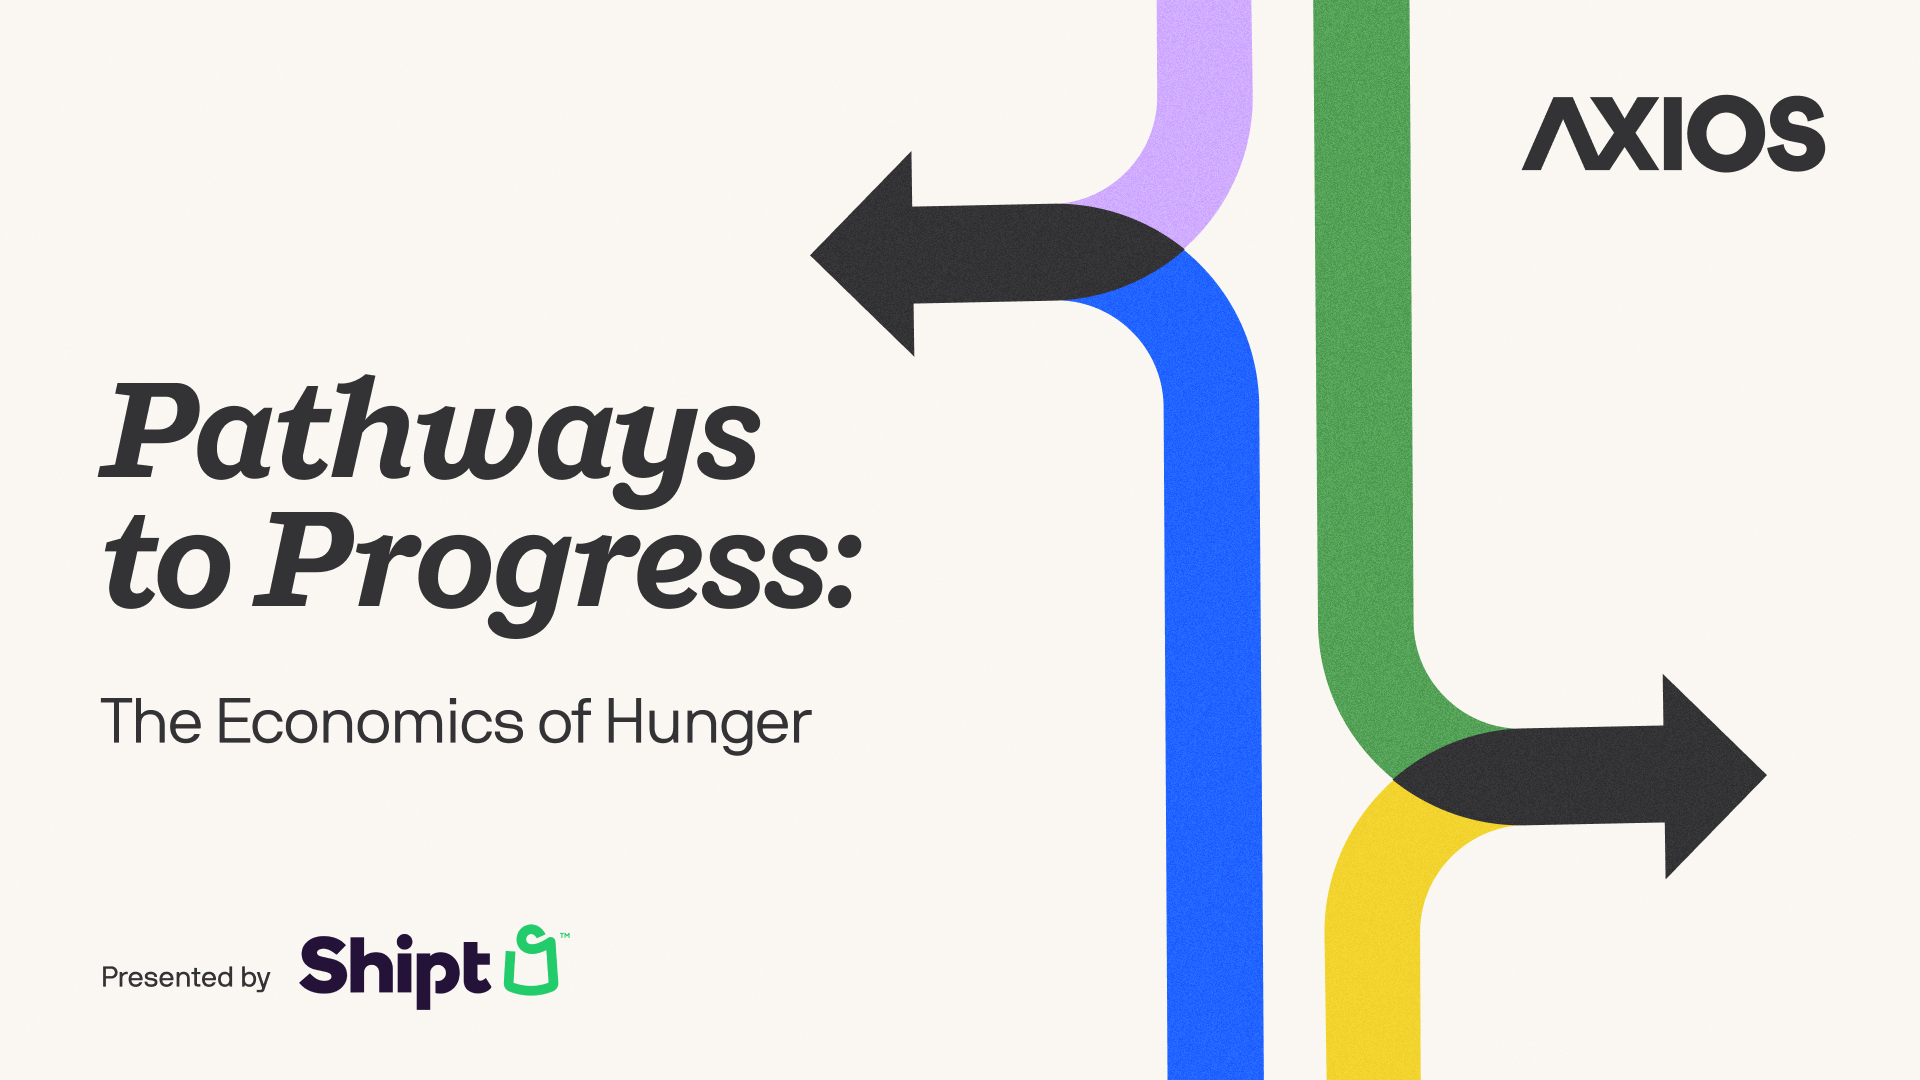 Axios' Pathways to Progress: The Economics of Hunger